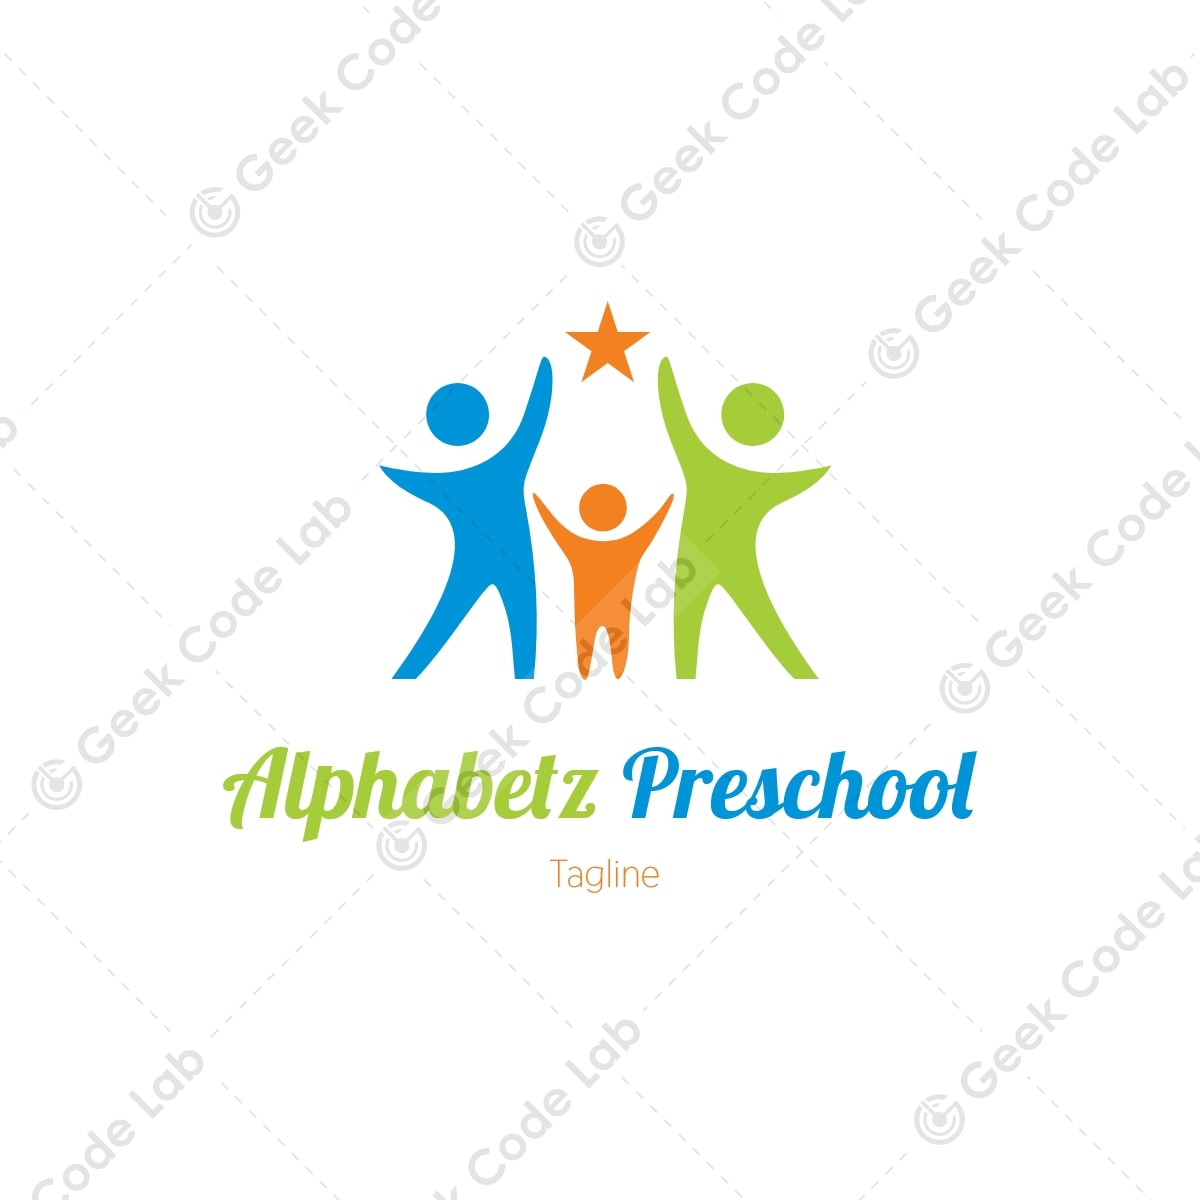 Alphabetz Preschool